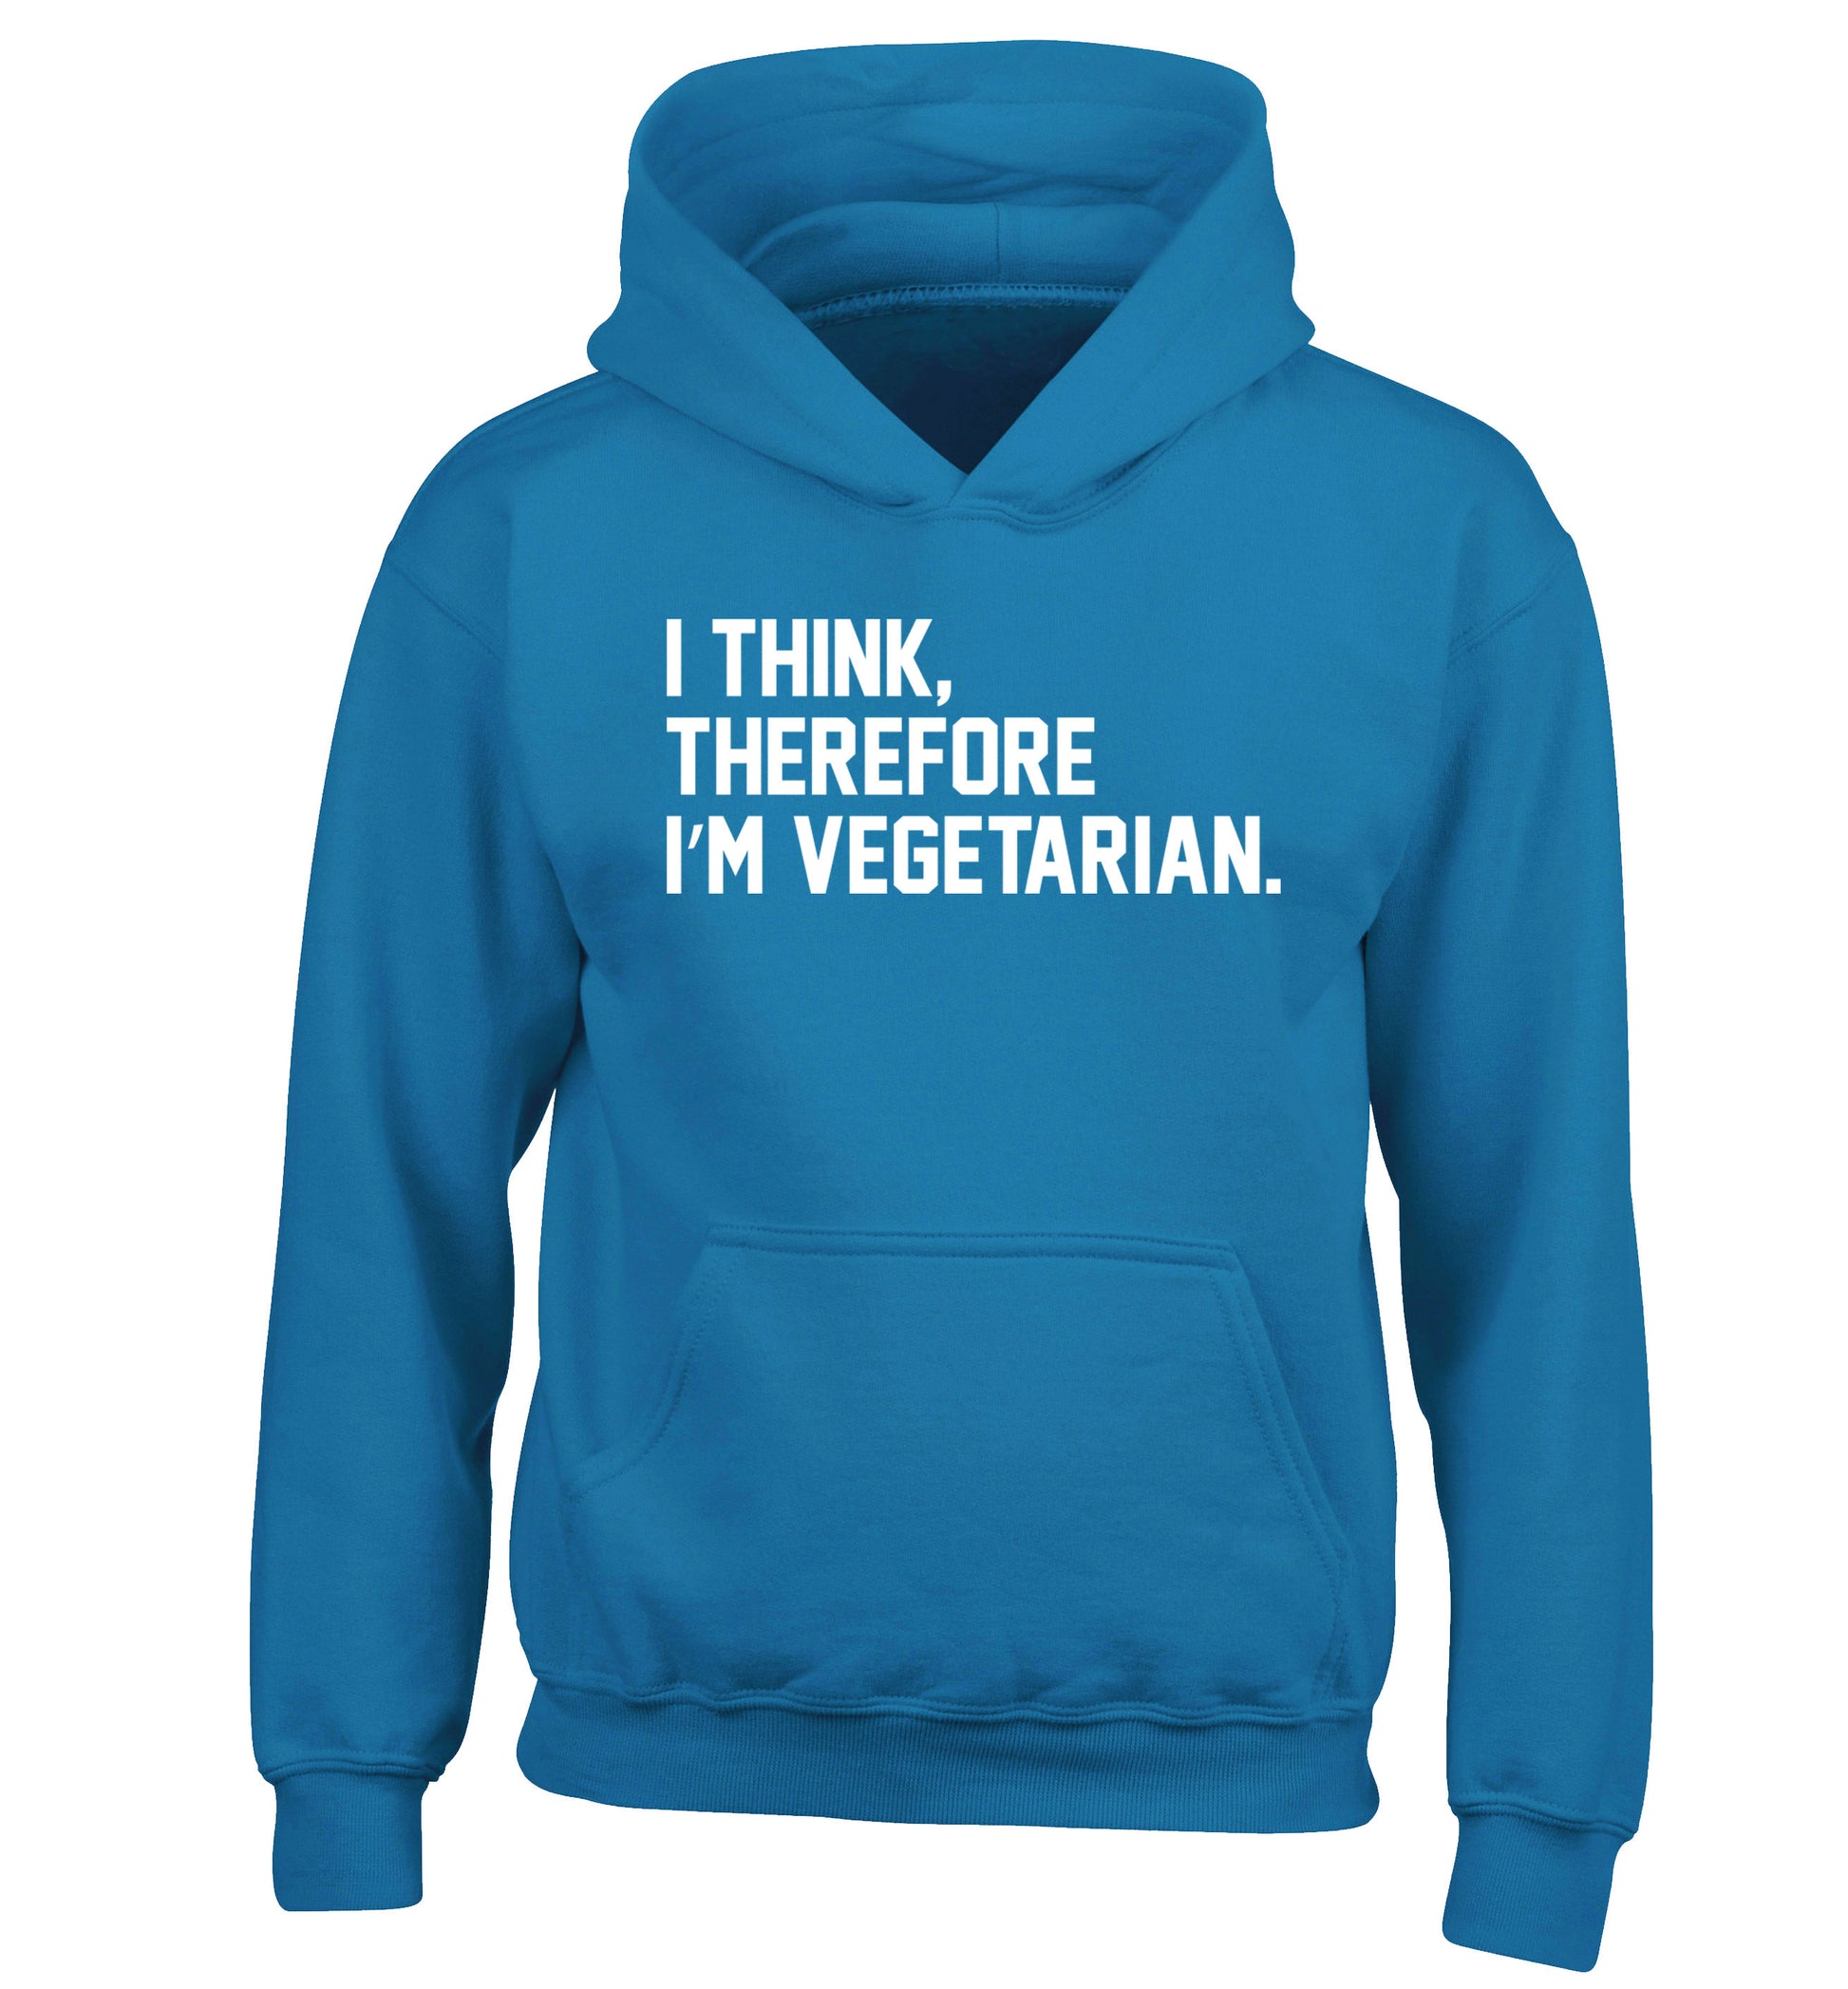 I think therefore I'm vegetarian children's blue hoodie 12-14 Years